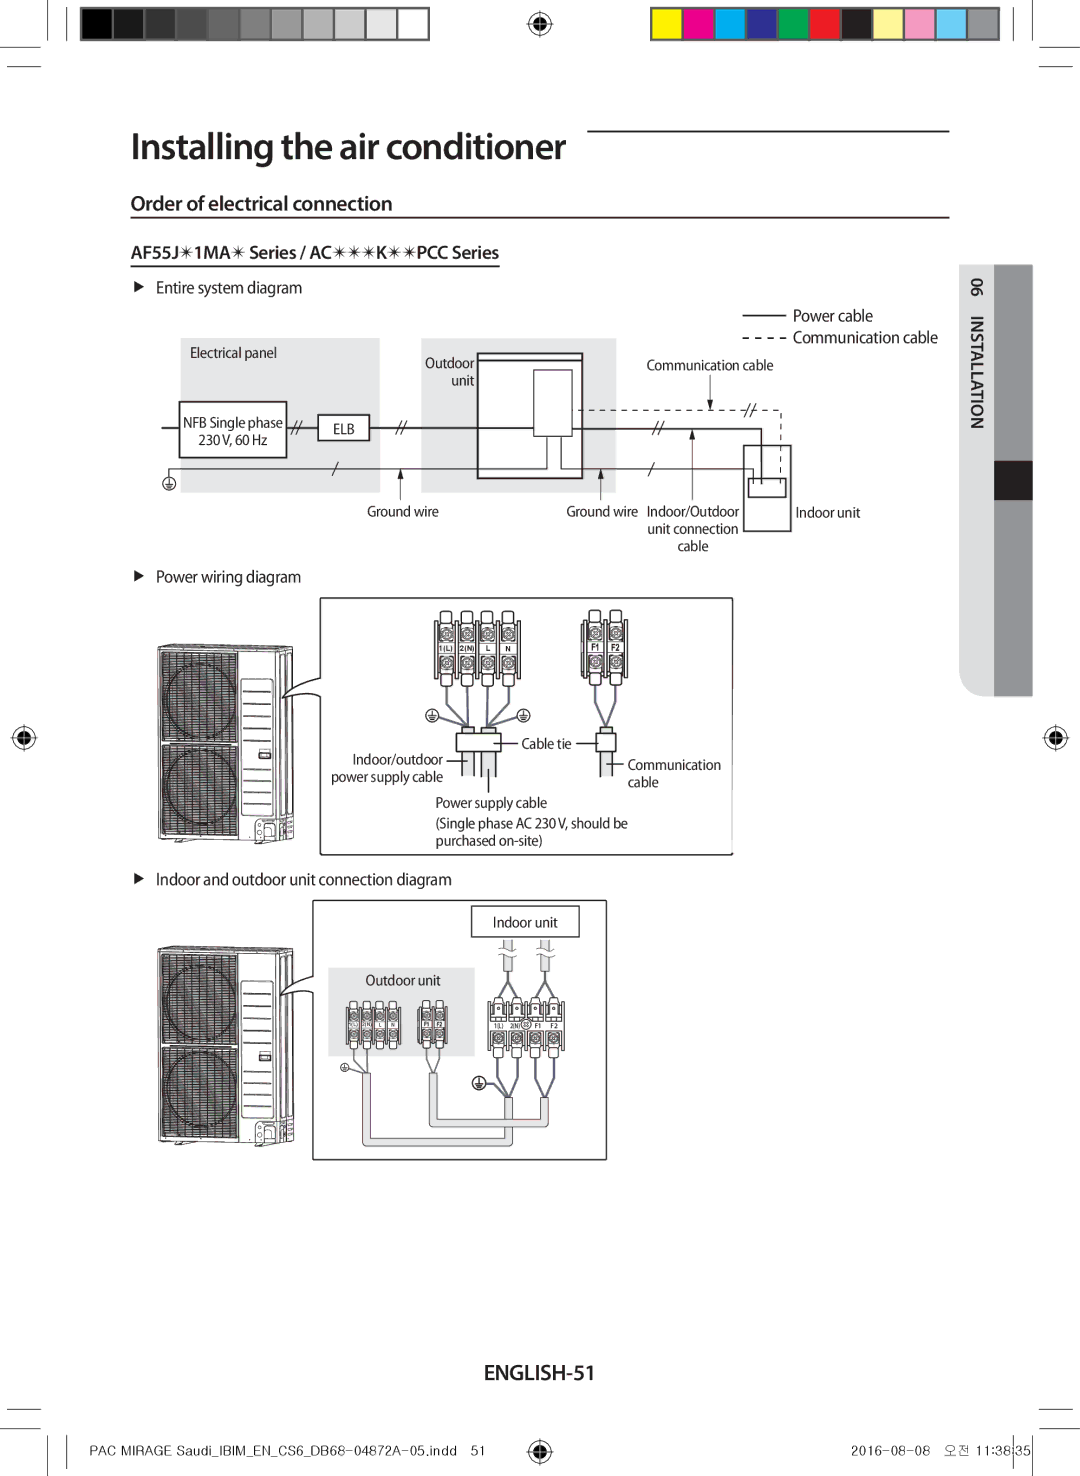 Samsung AF55MV1MAEENMG manual Order of electrical connection, ENGLISH-51, FfEntire system diagram, FfPower wiring diagram 